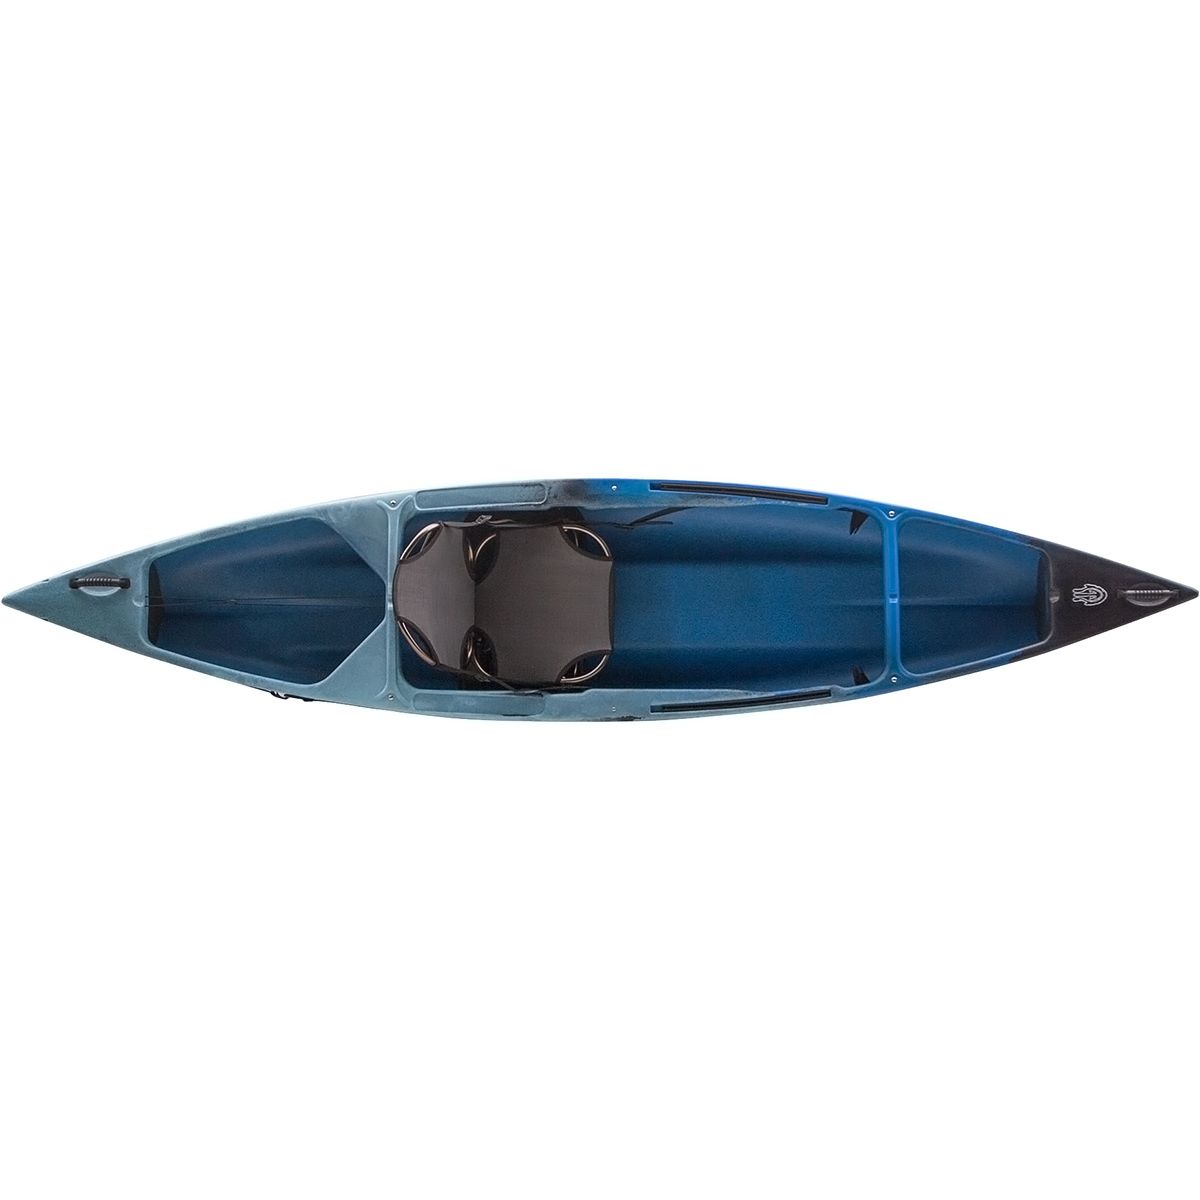 Color:Blue Lagooon:Native Watercraft Ultimate 12 Basic Kayak - 2018